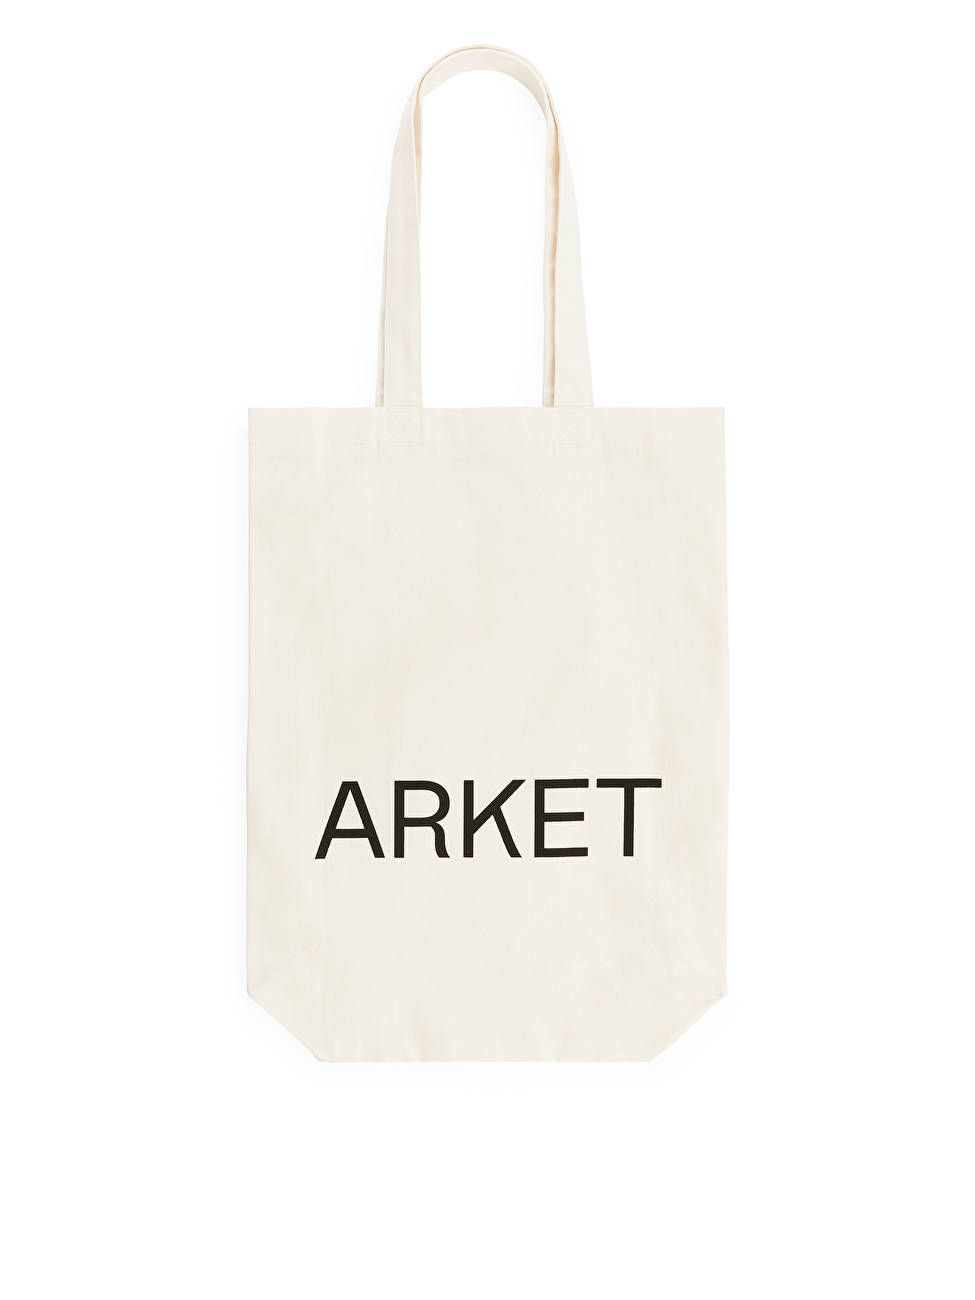 ARKET Canvas Tote Bag - Off-White - ARKET GB | ARKET (US&UK)